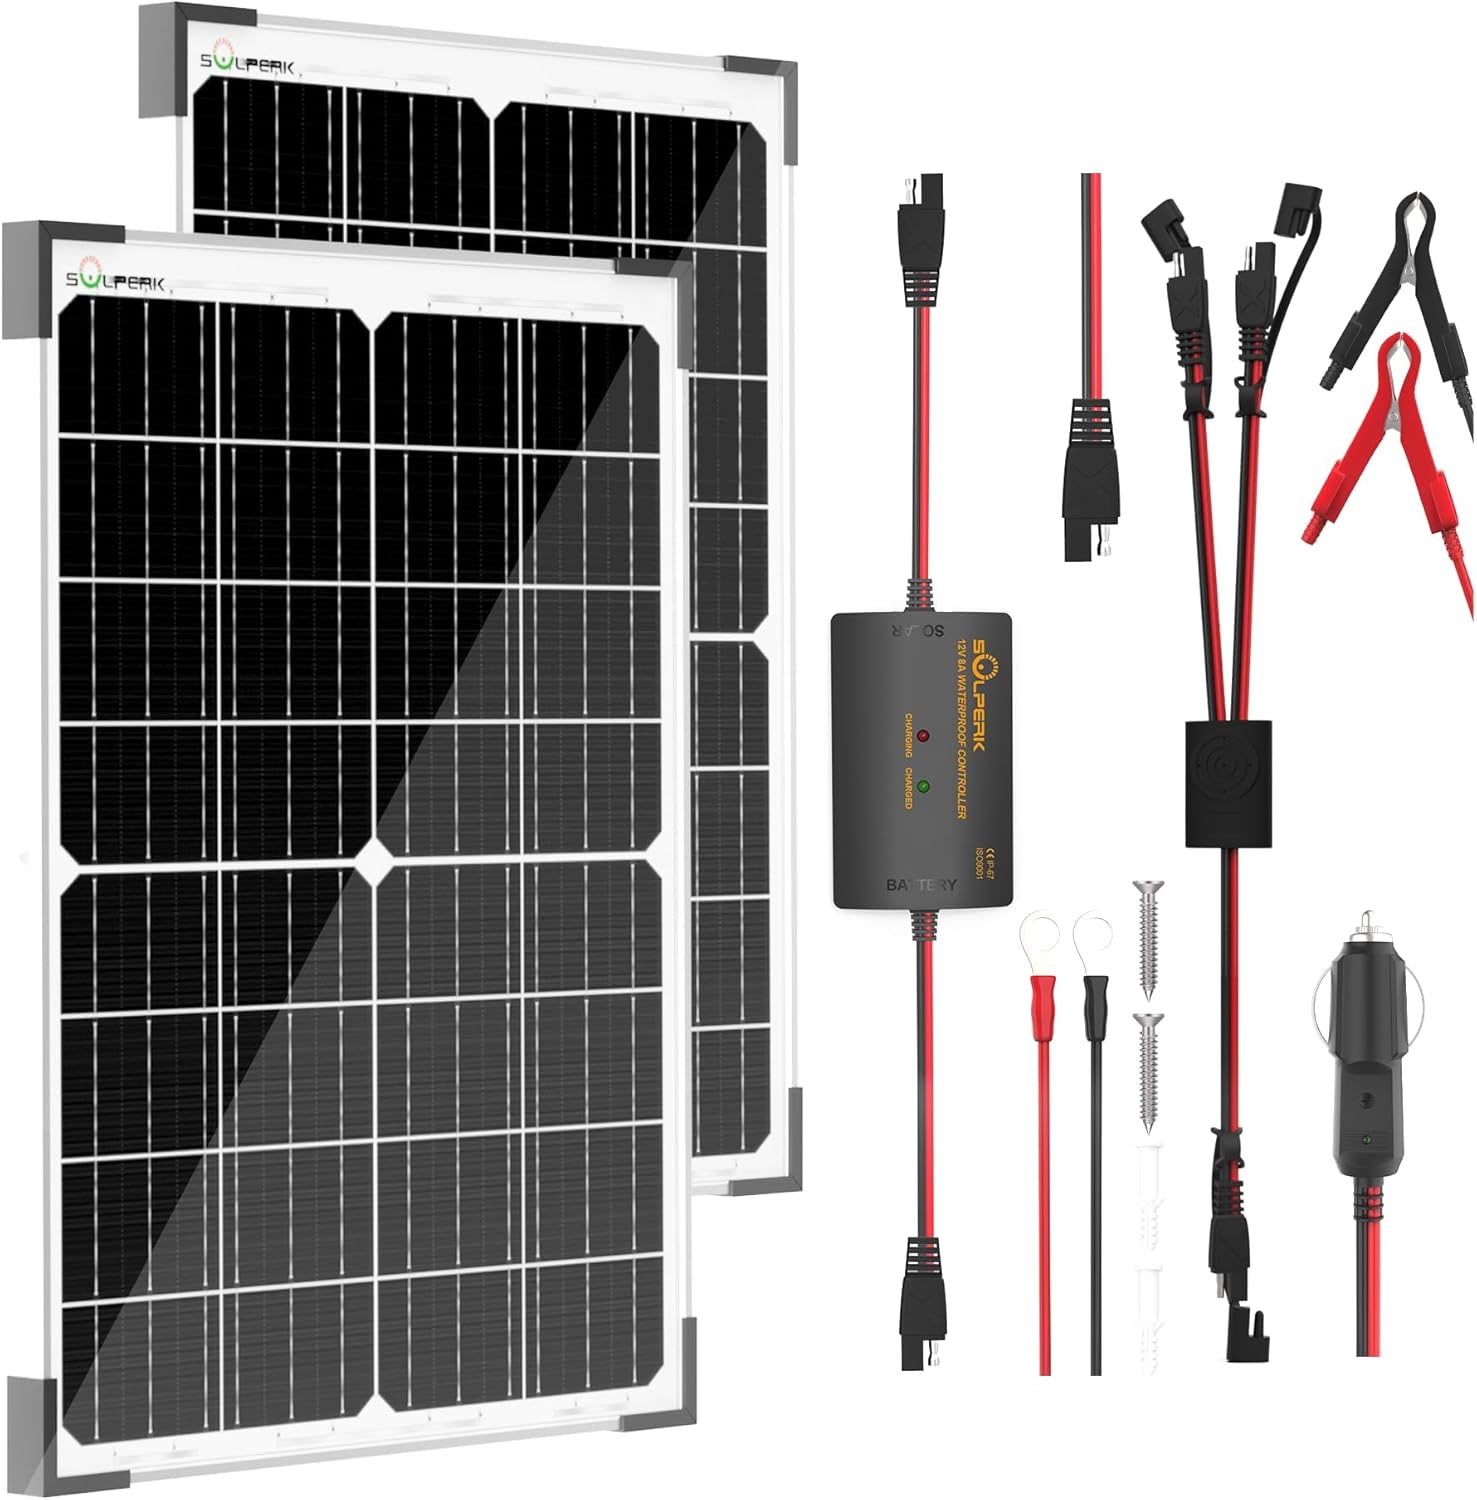 SOLPERK 25W 12V Solar Battery Charger Review